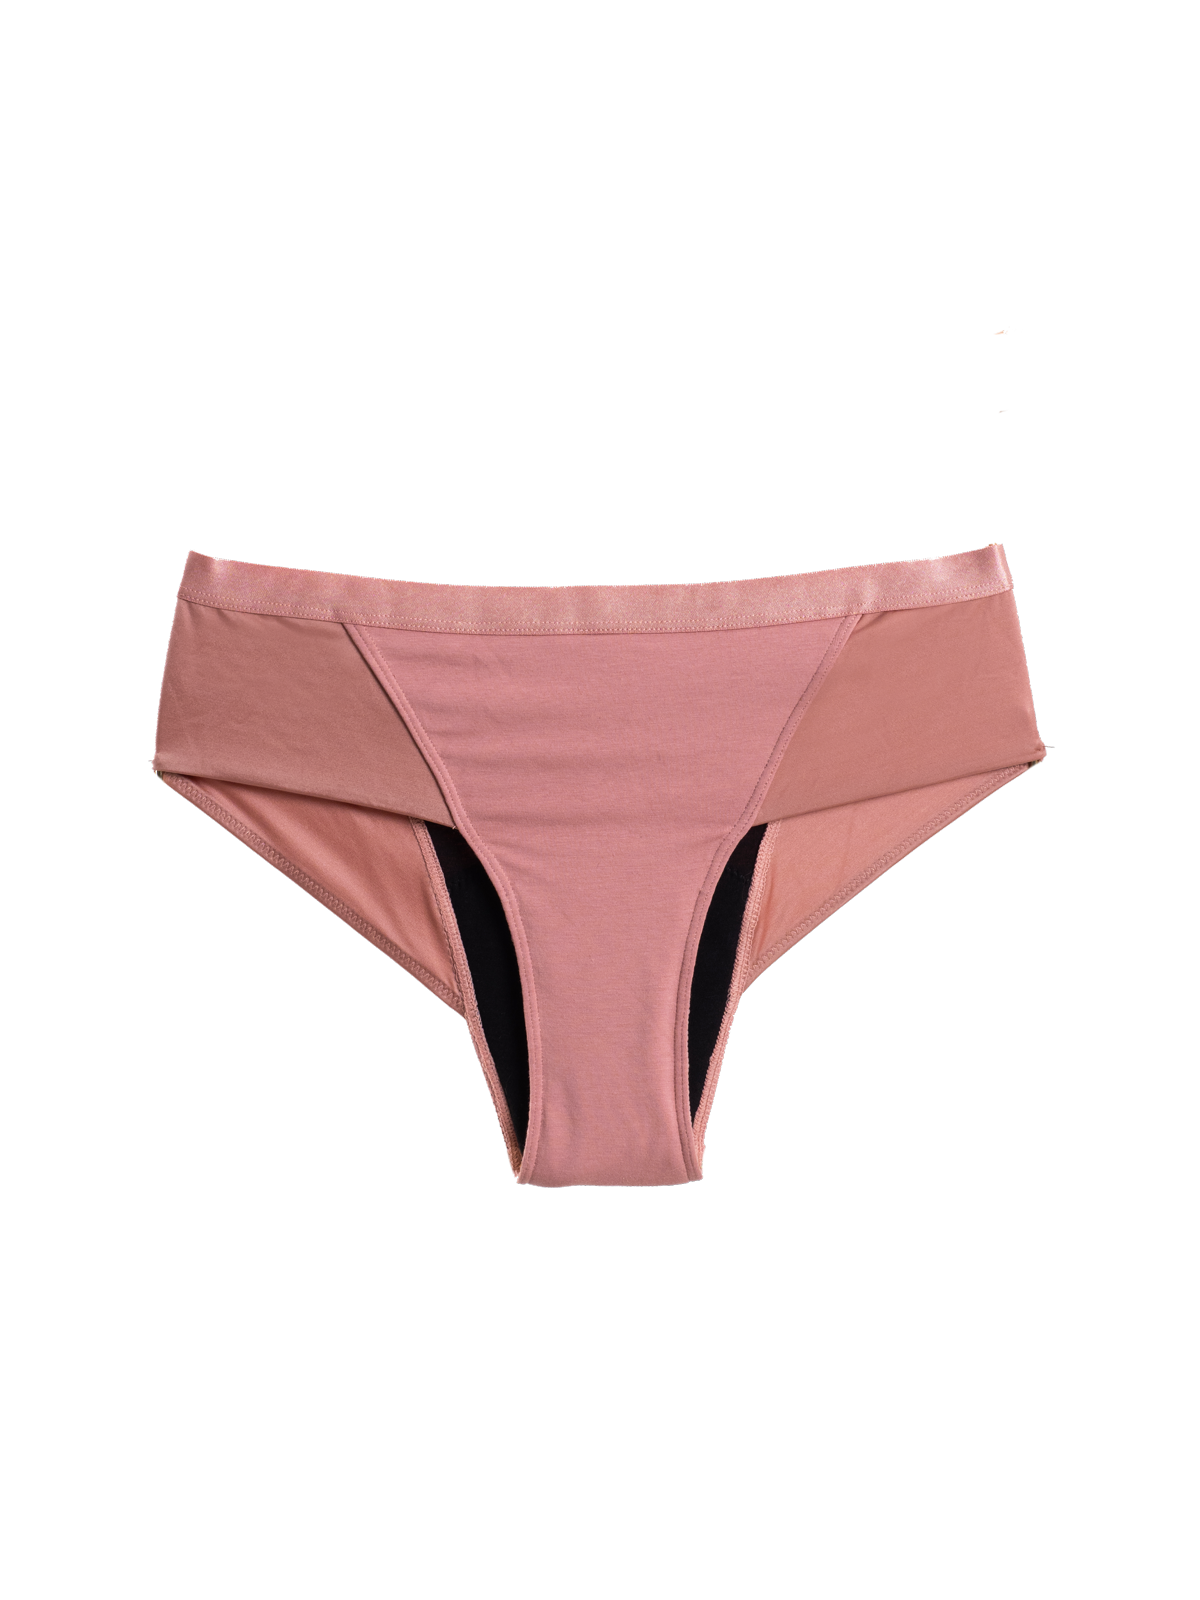 LOOP - ALABAMA Period Panty, Pink 🩸🩸